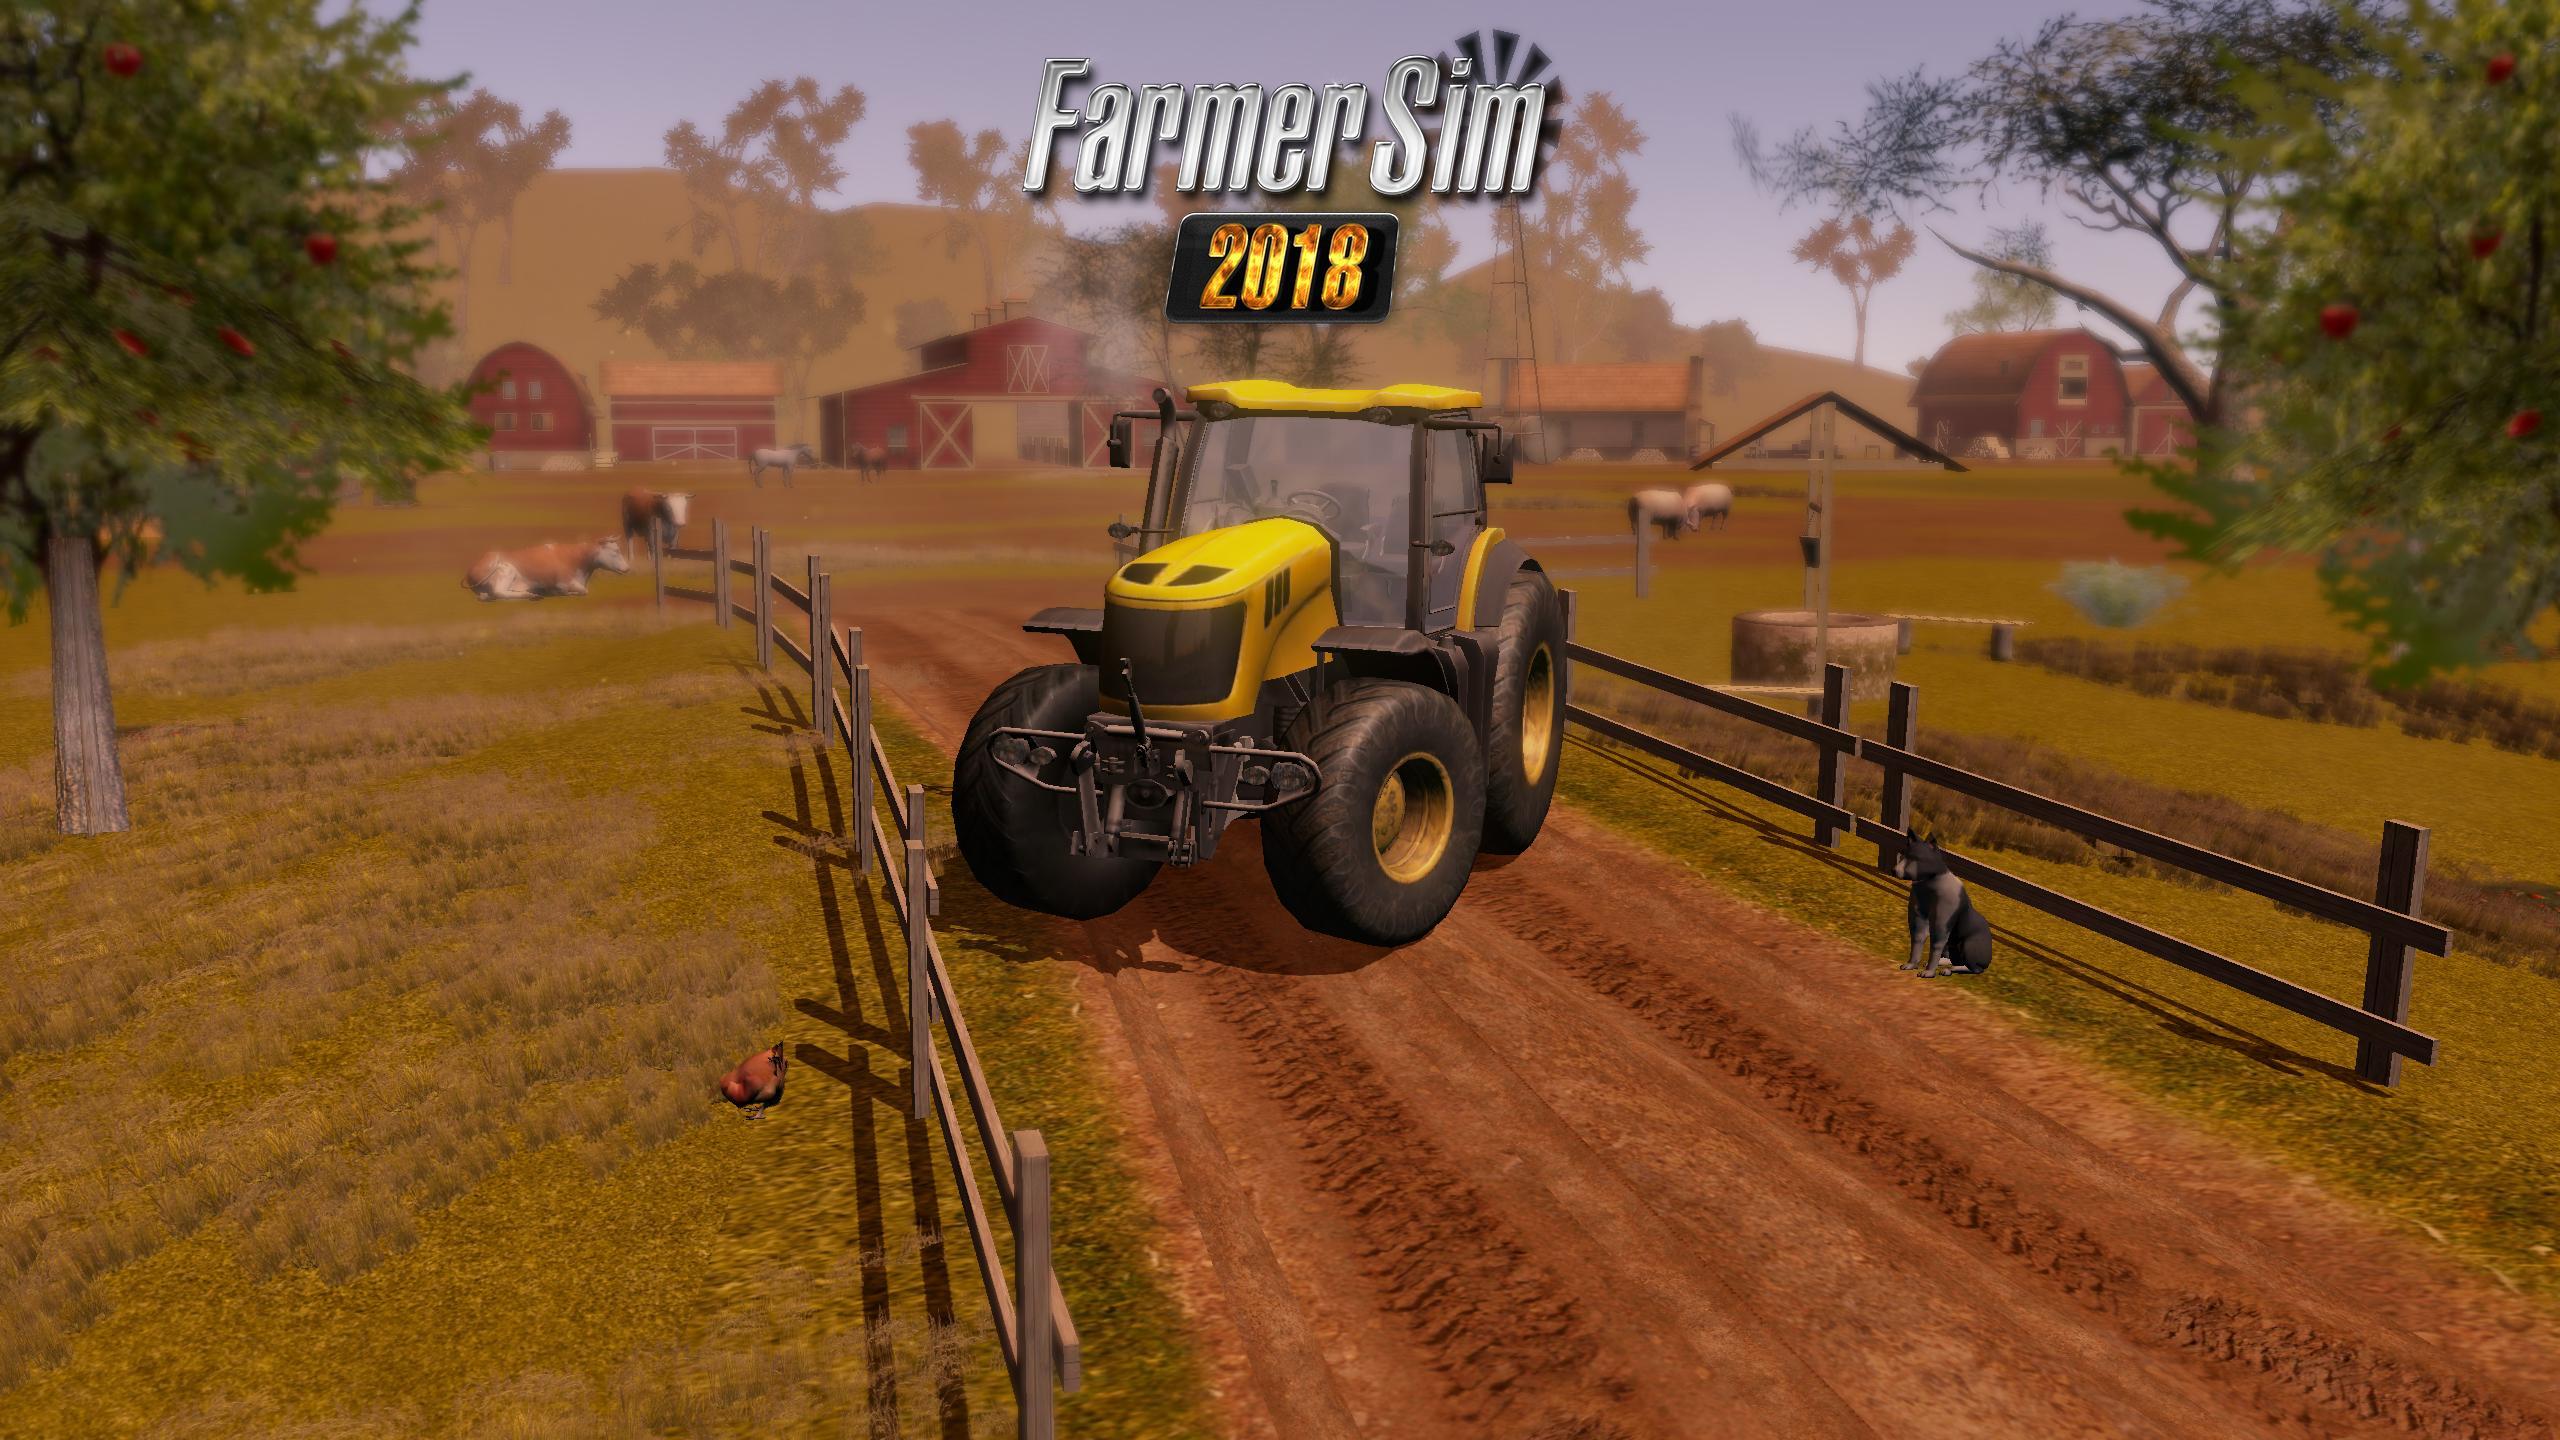 Screenshot 1 of granjero sim 2018 